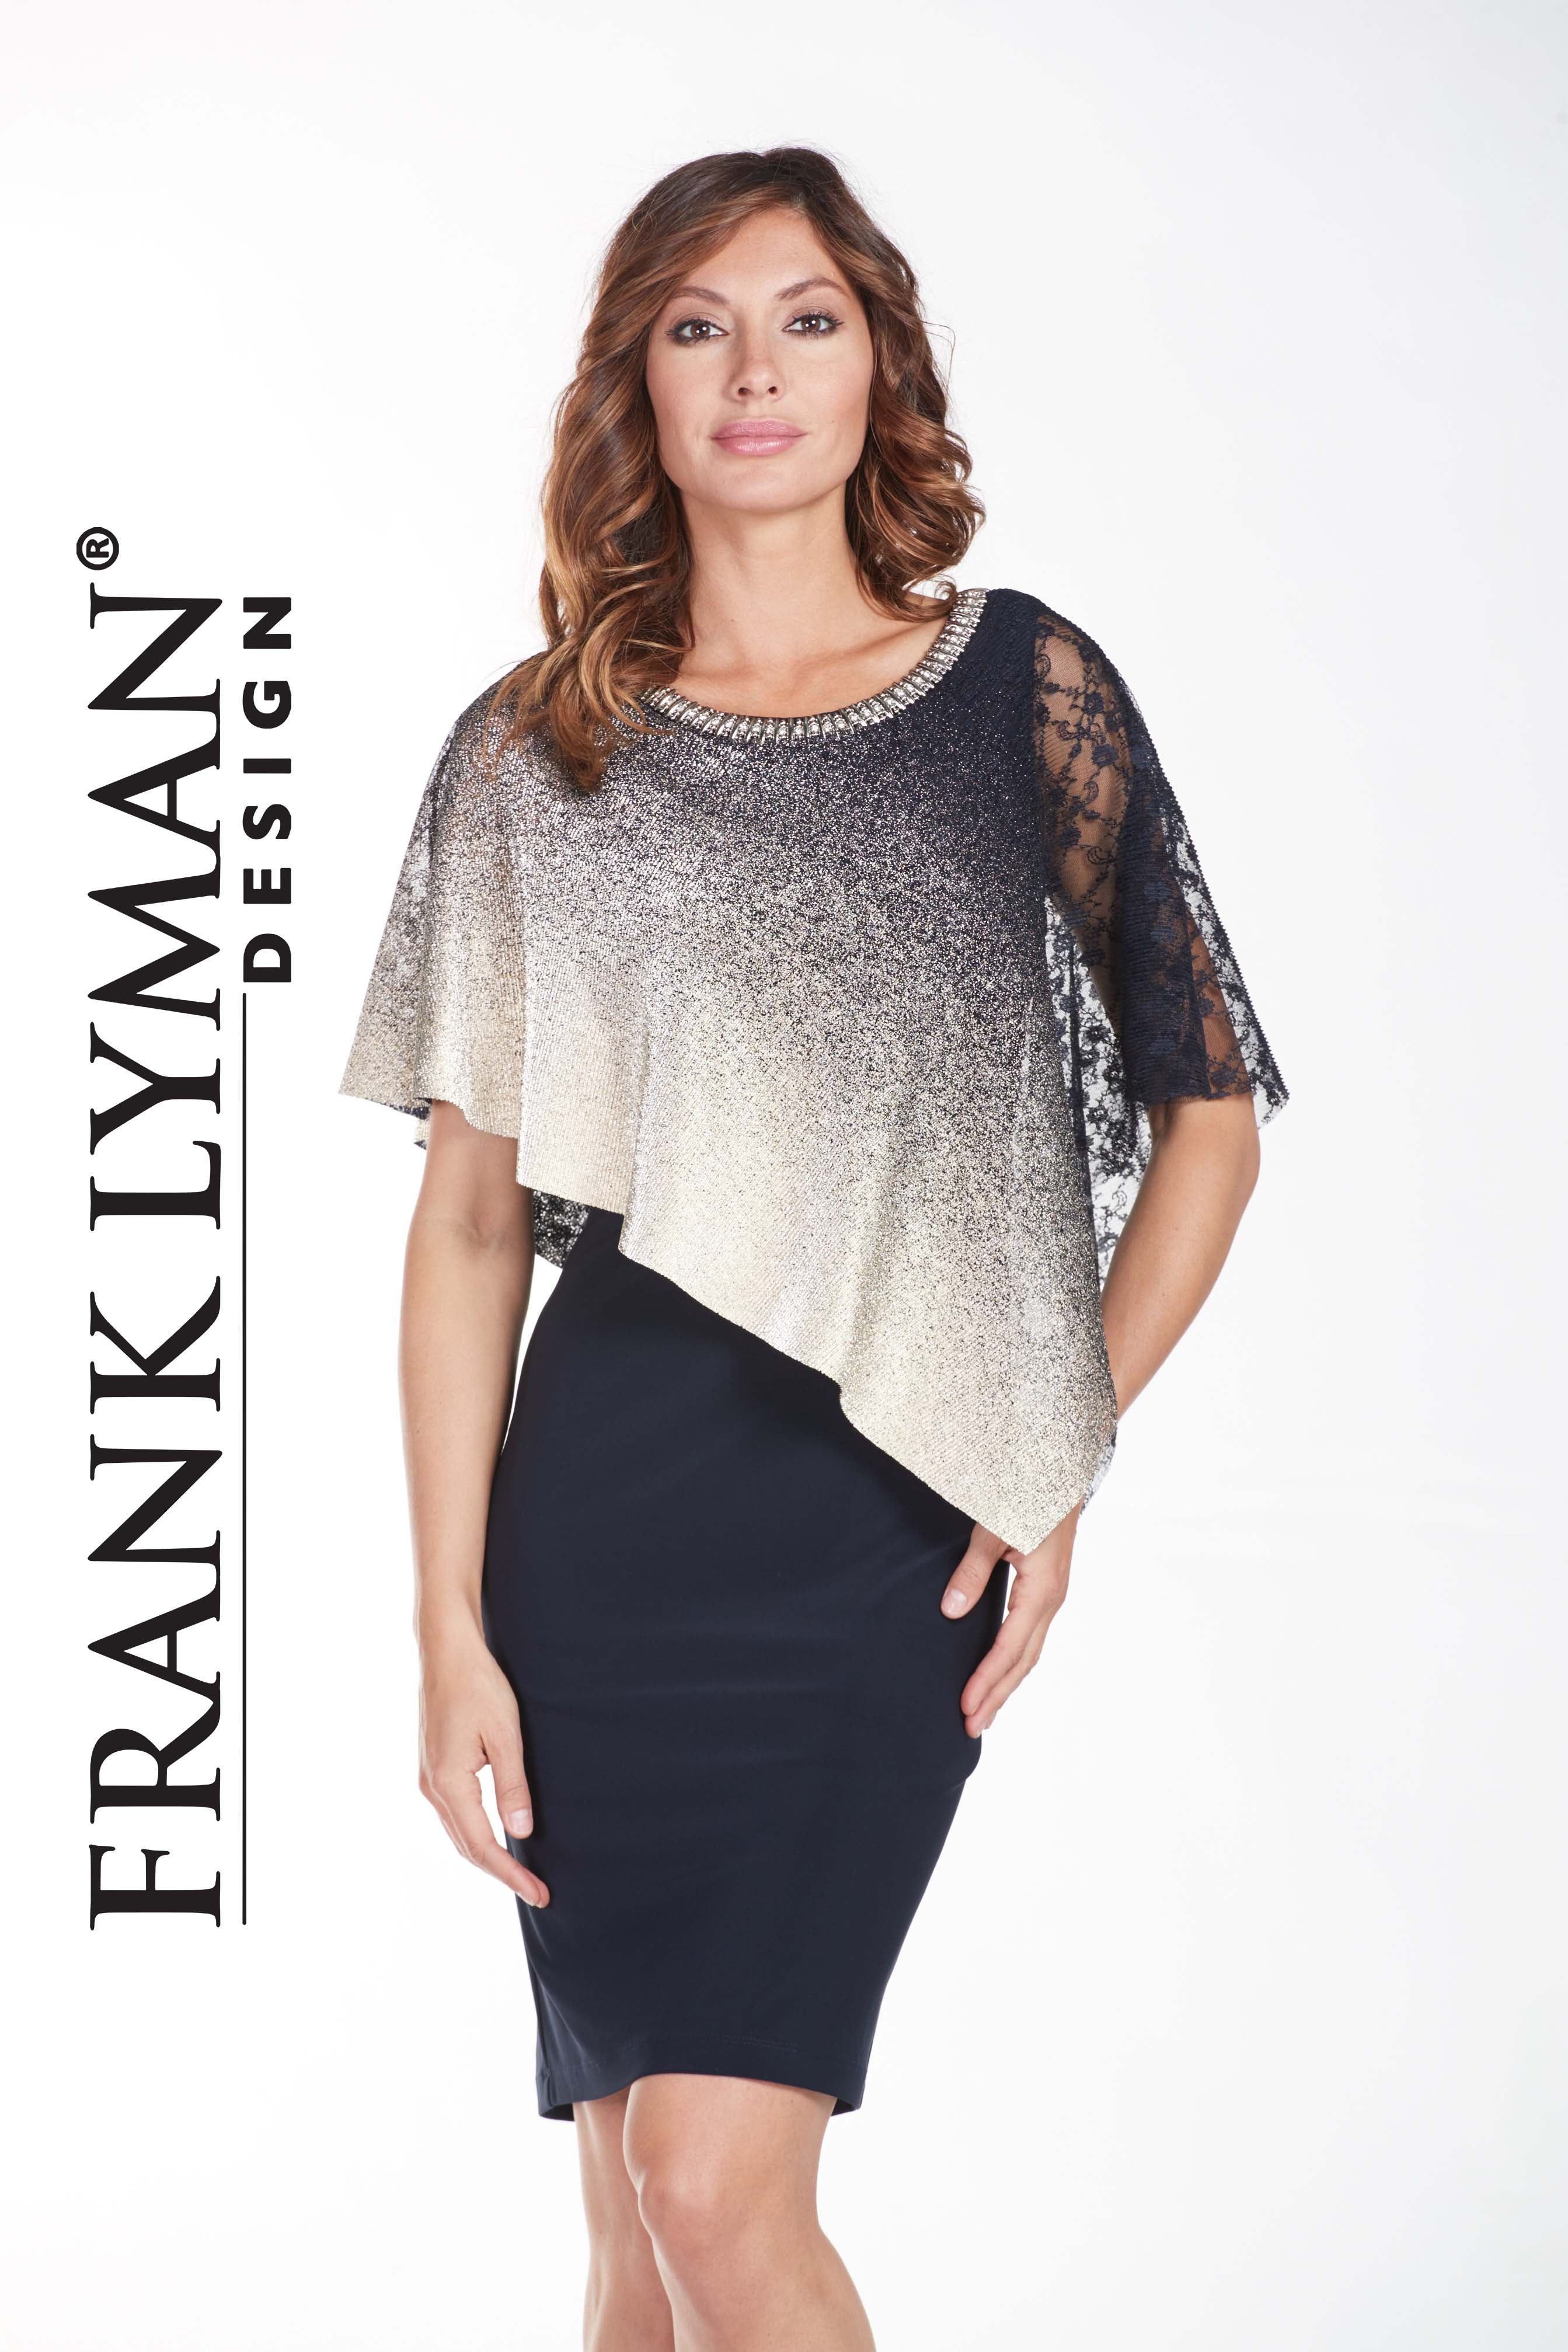 Buy Frank Lyman Montreal Dresses Online Frank Lyman Montreal Dresses Marianne Style 0067